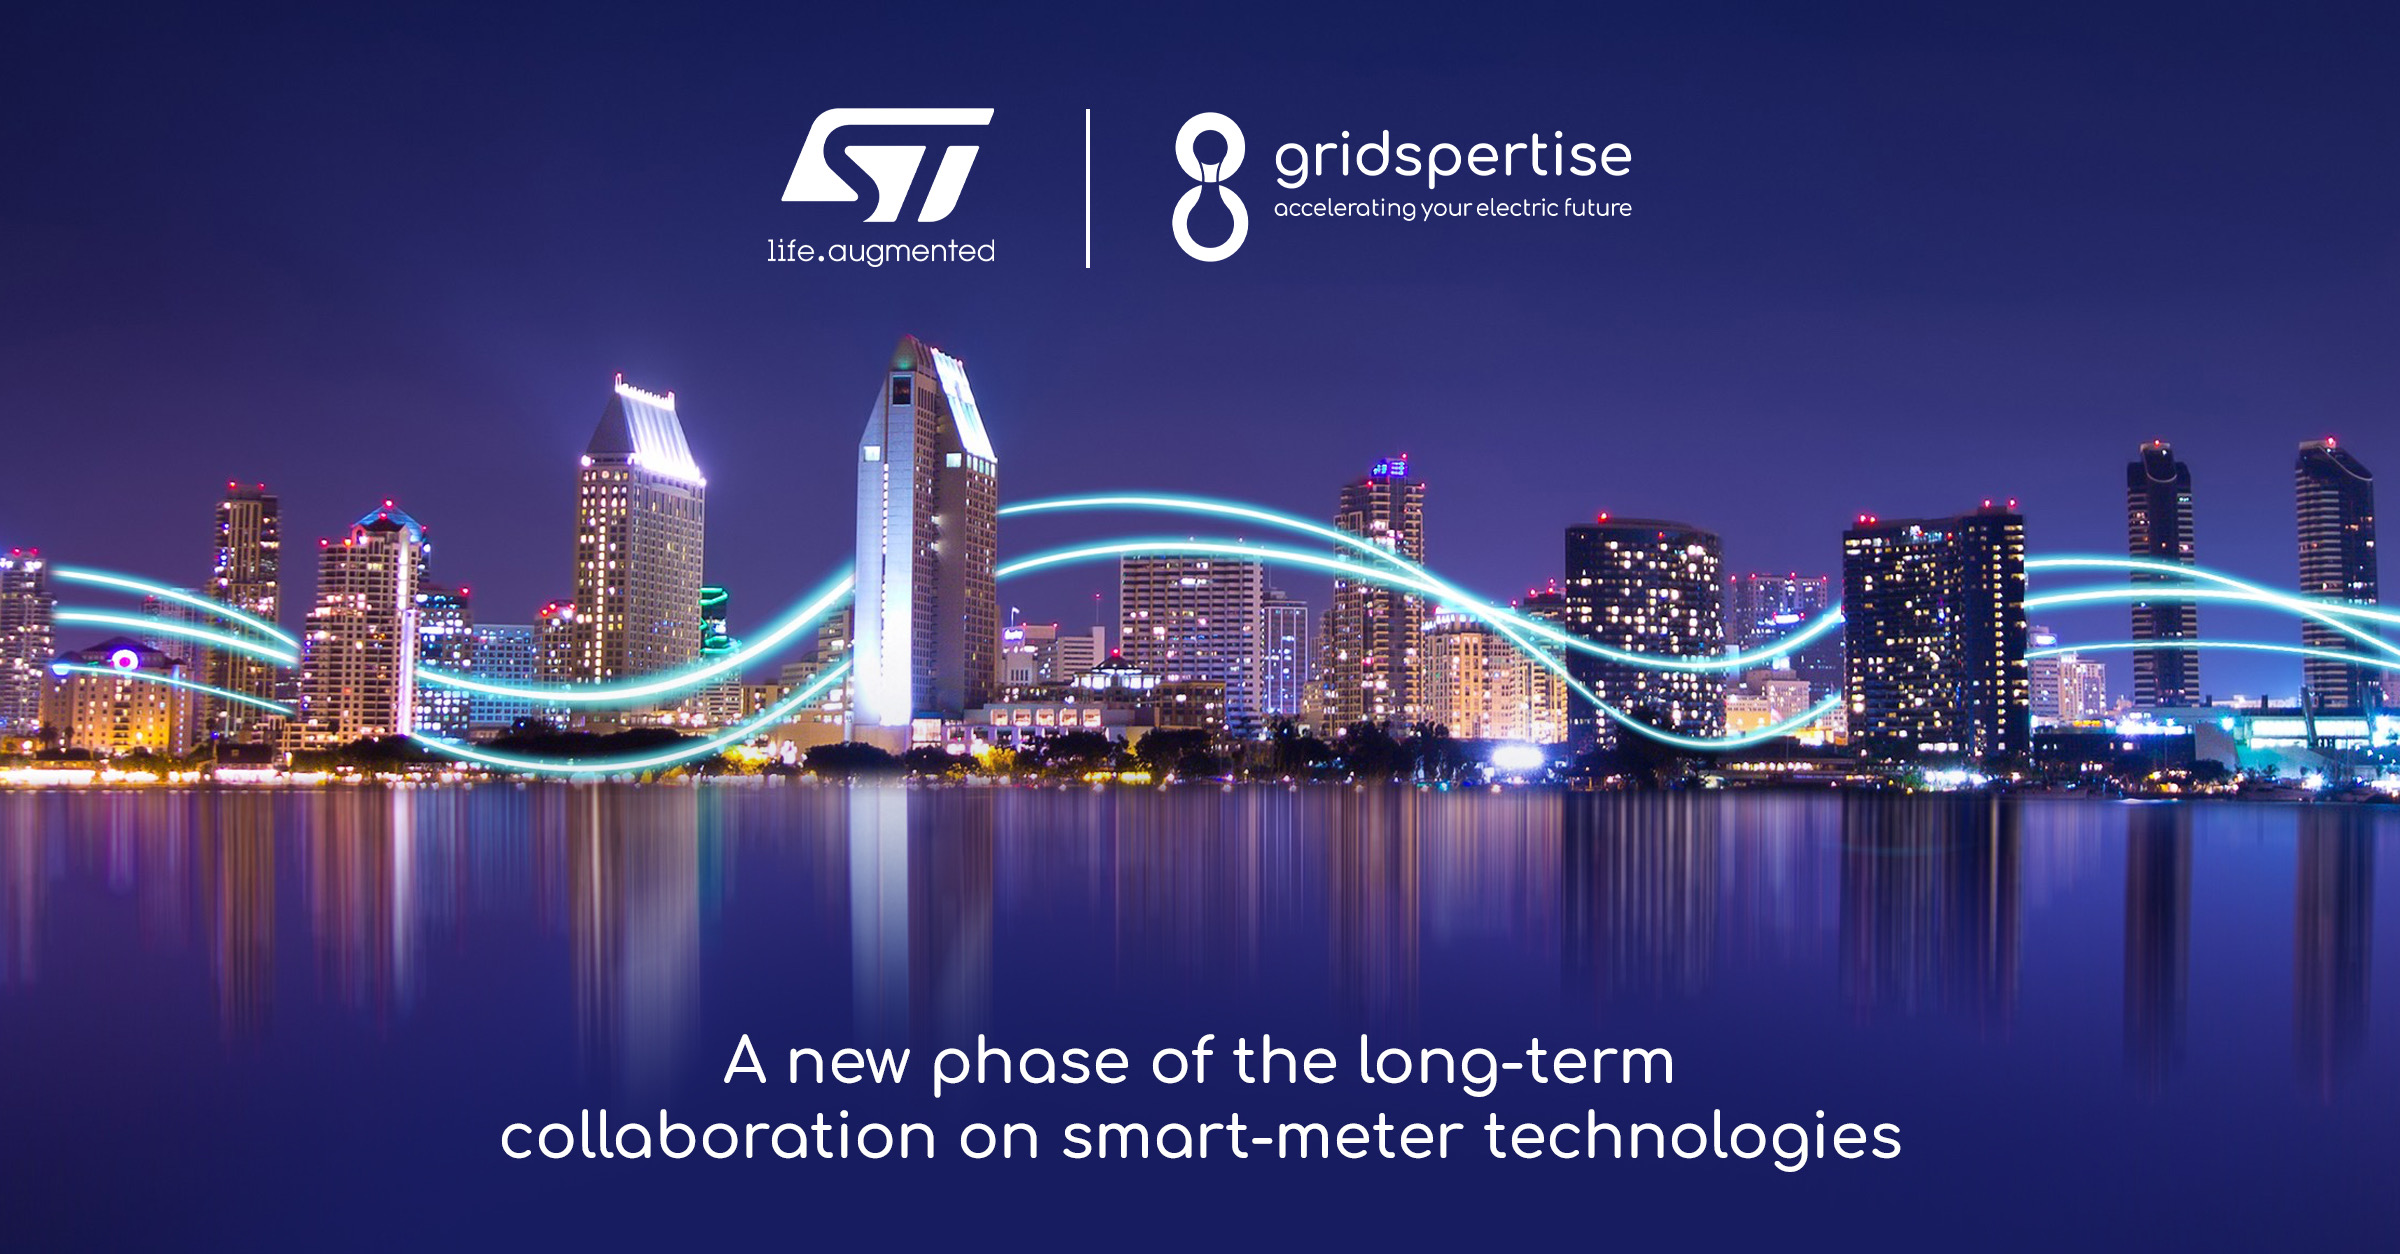 T4503D -- Feb 7 2023 -- ST_Gridspertise smart-metering collaboration_IMAGE